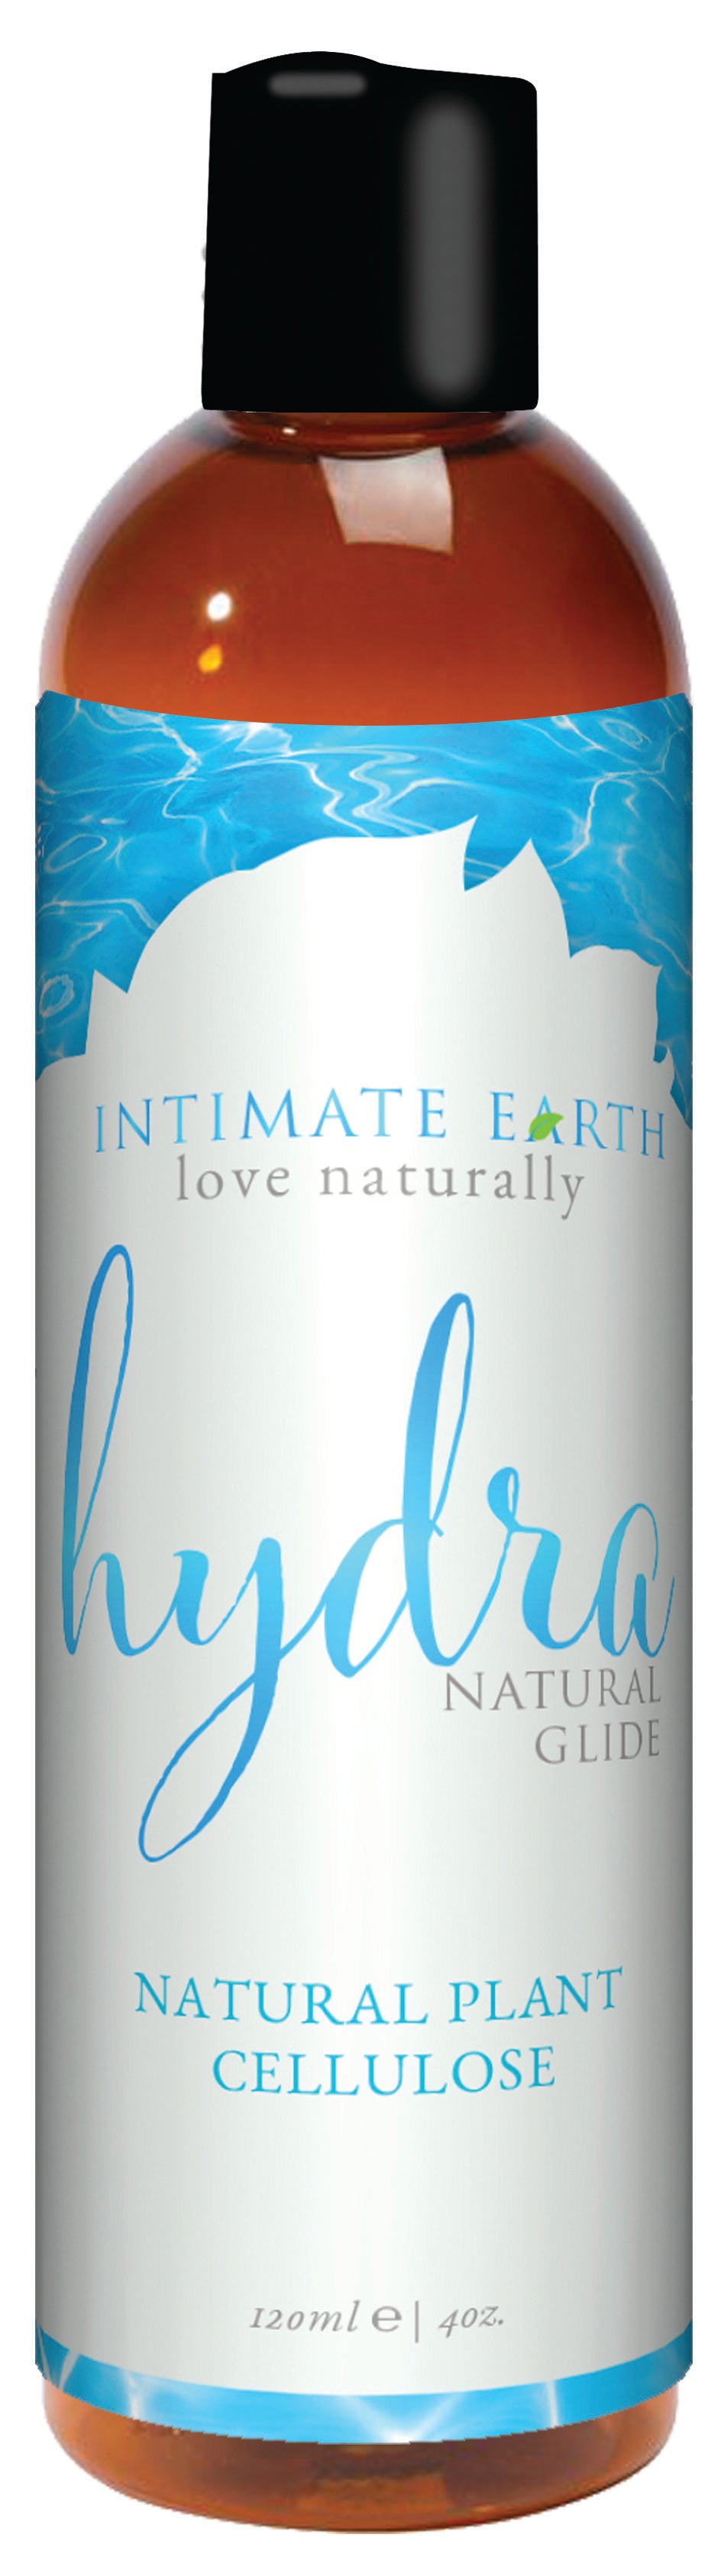 Intimate Earth - Hydra Natural Glide 120 ml